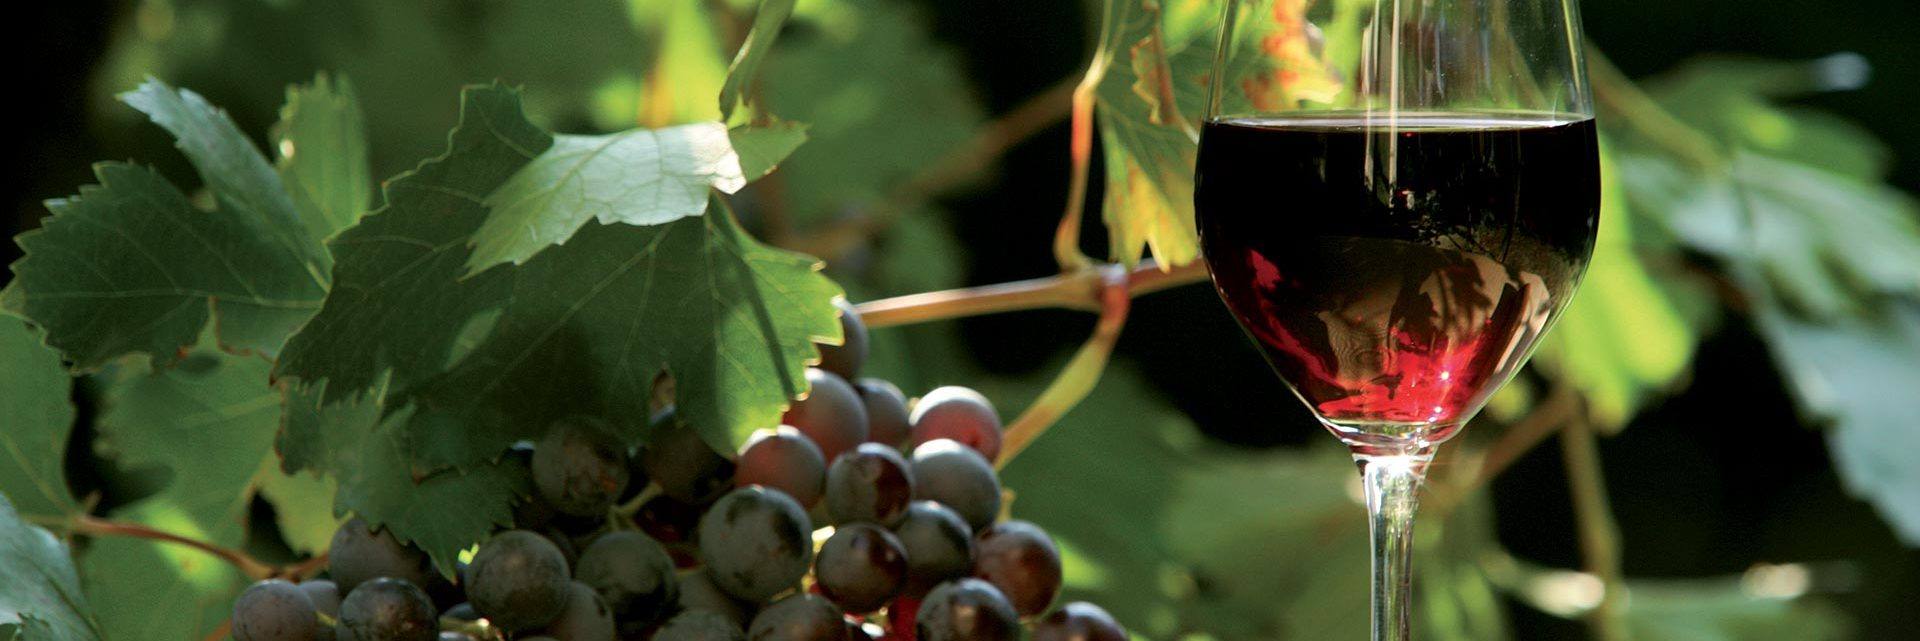 Vineyards and wine